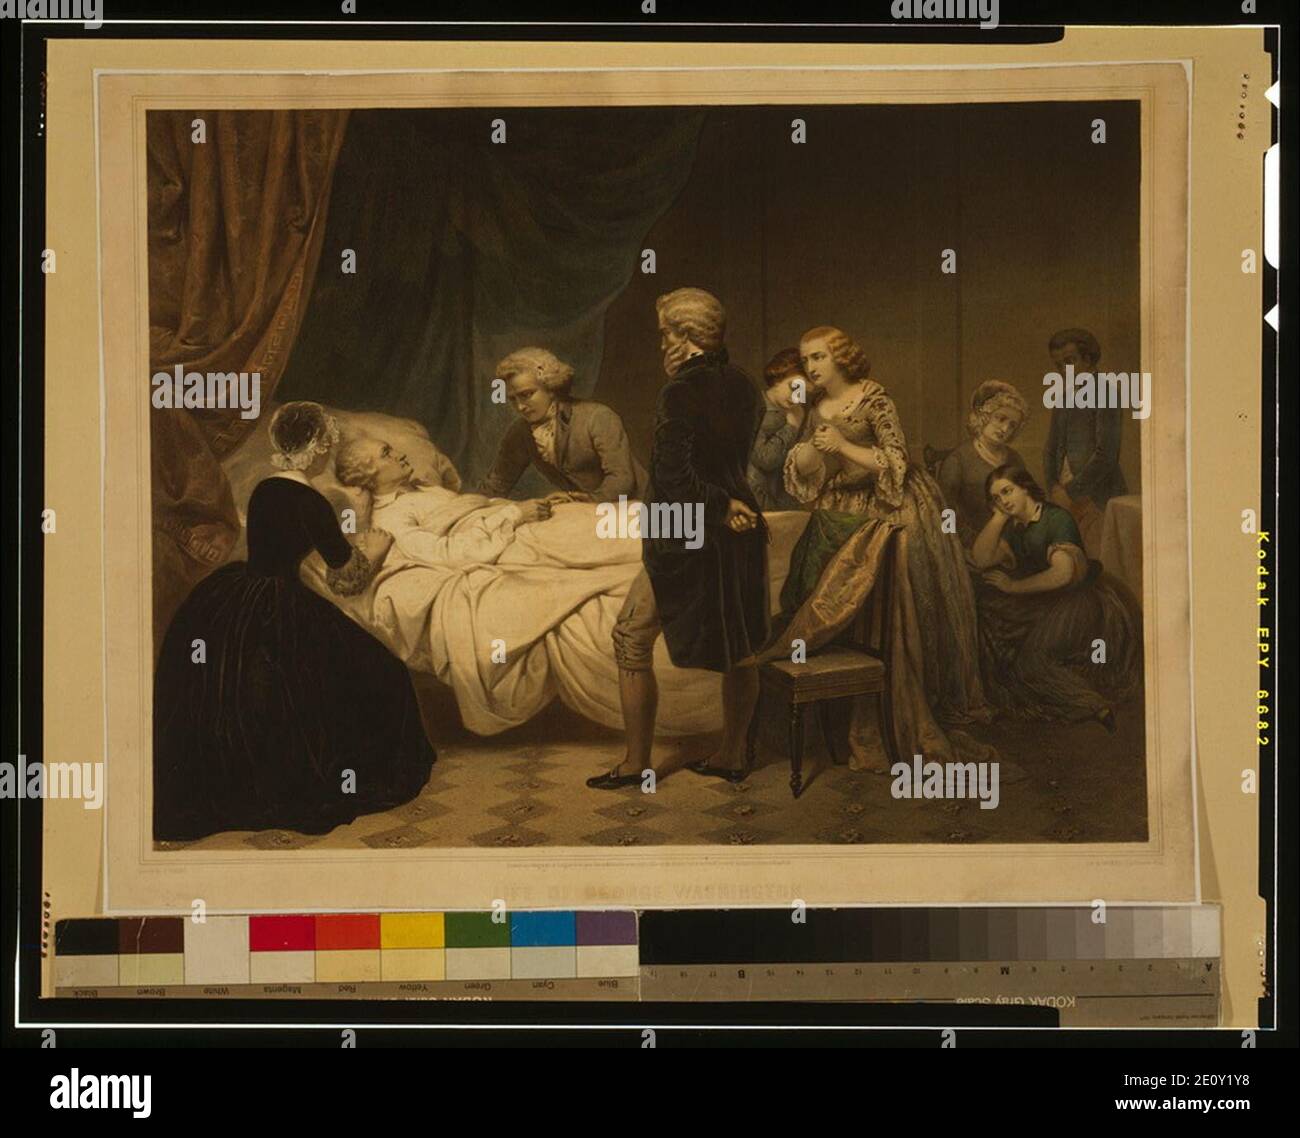 Life of George Washington The Christian death - - painted by Stearns ; lith. by Régnier, imp. Lemercier, Paris. Stock Photo